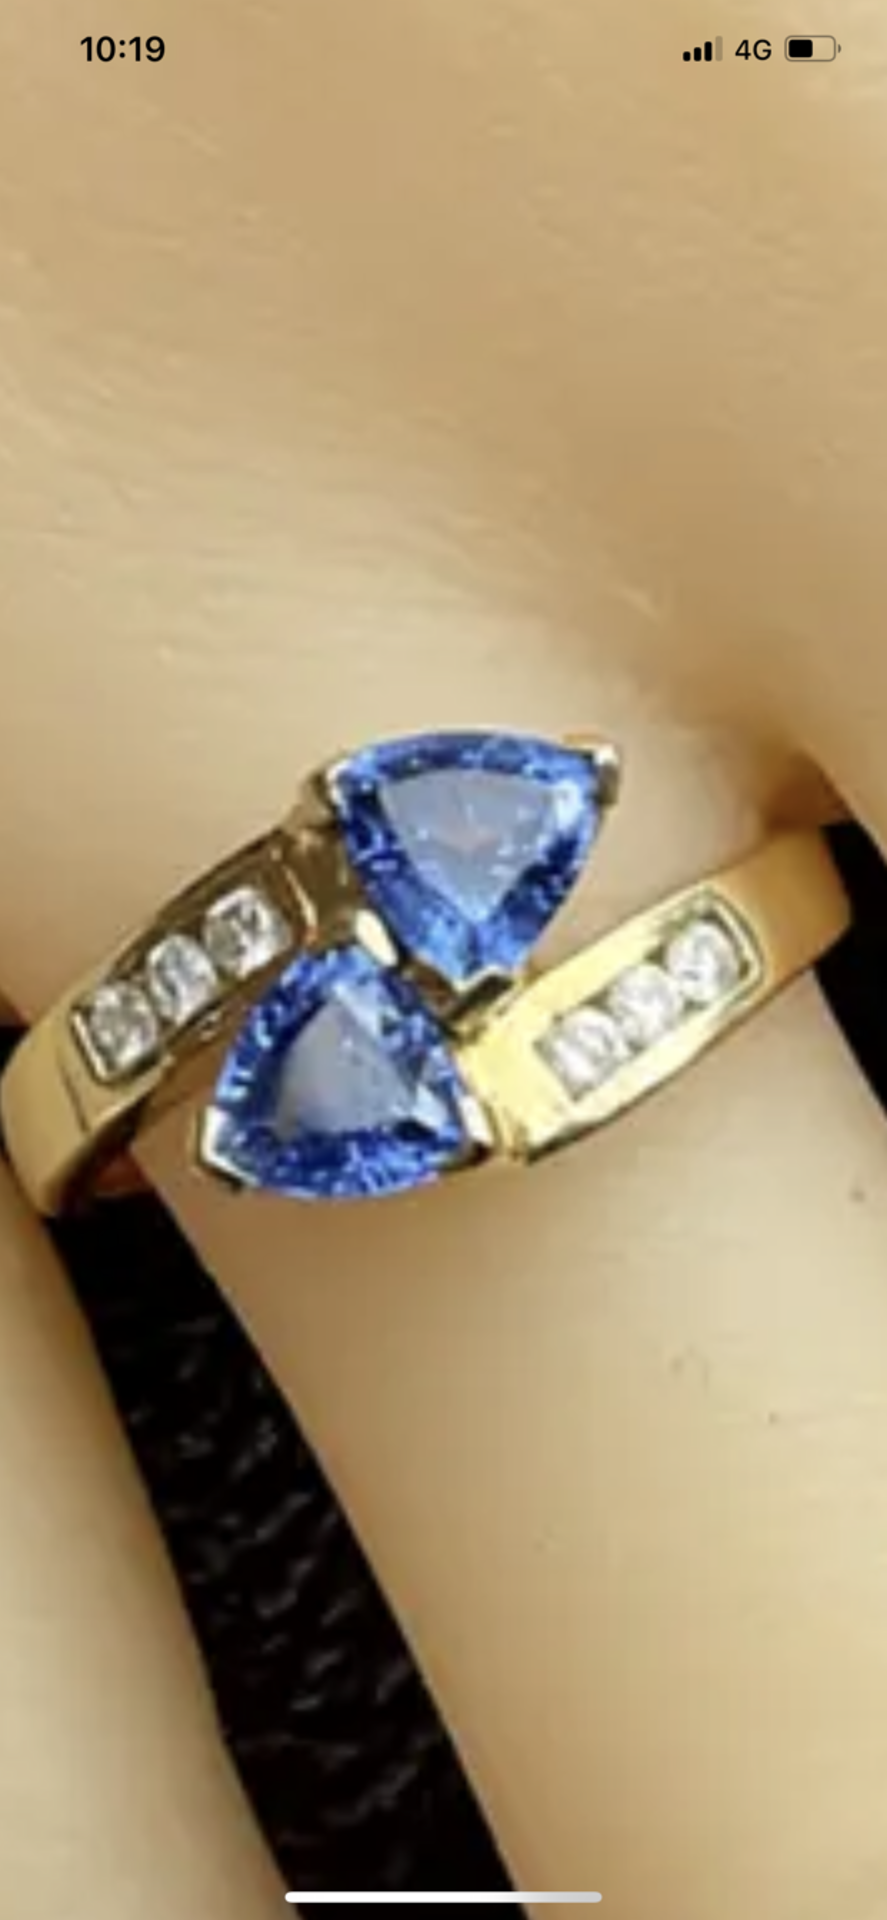 FINE 18ct GOLD CEYLON BLUE SAPPHIRE & DIAMOND RING - £3k INSURANCE REPLACEMENT